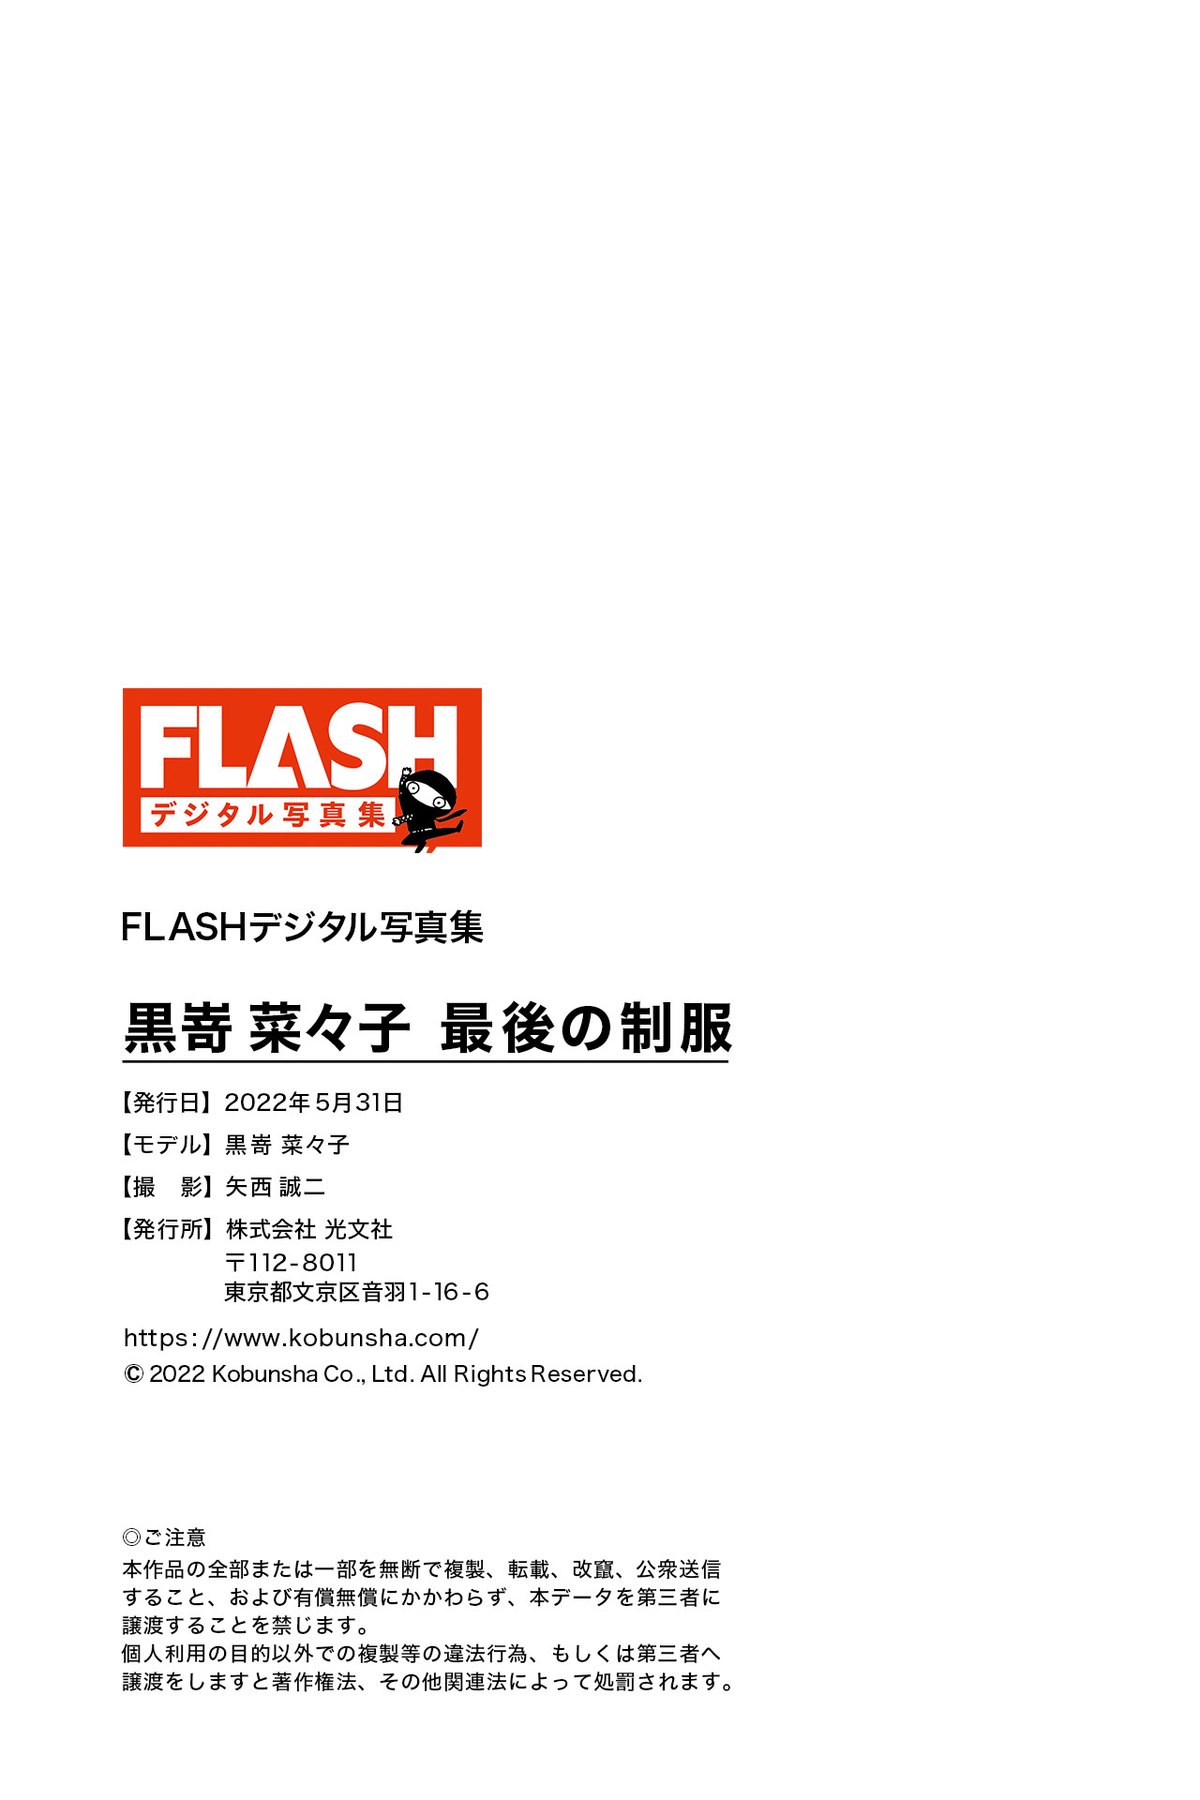 FLASH Photobook 2022 05 31 Nanako Kurosaki 黒嵜菜々子 The Last Uniform 0096 2765266871.jpg